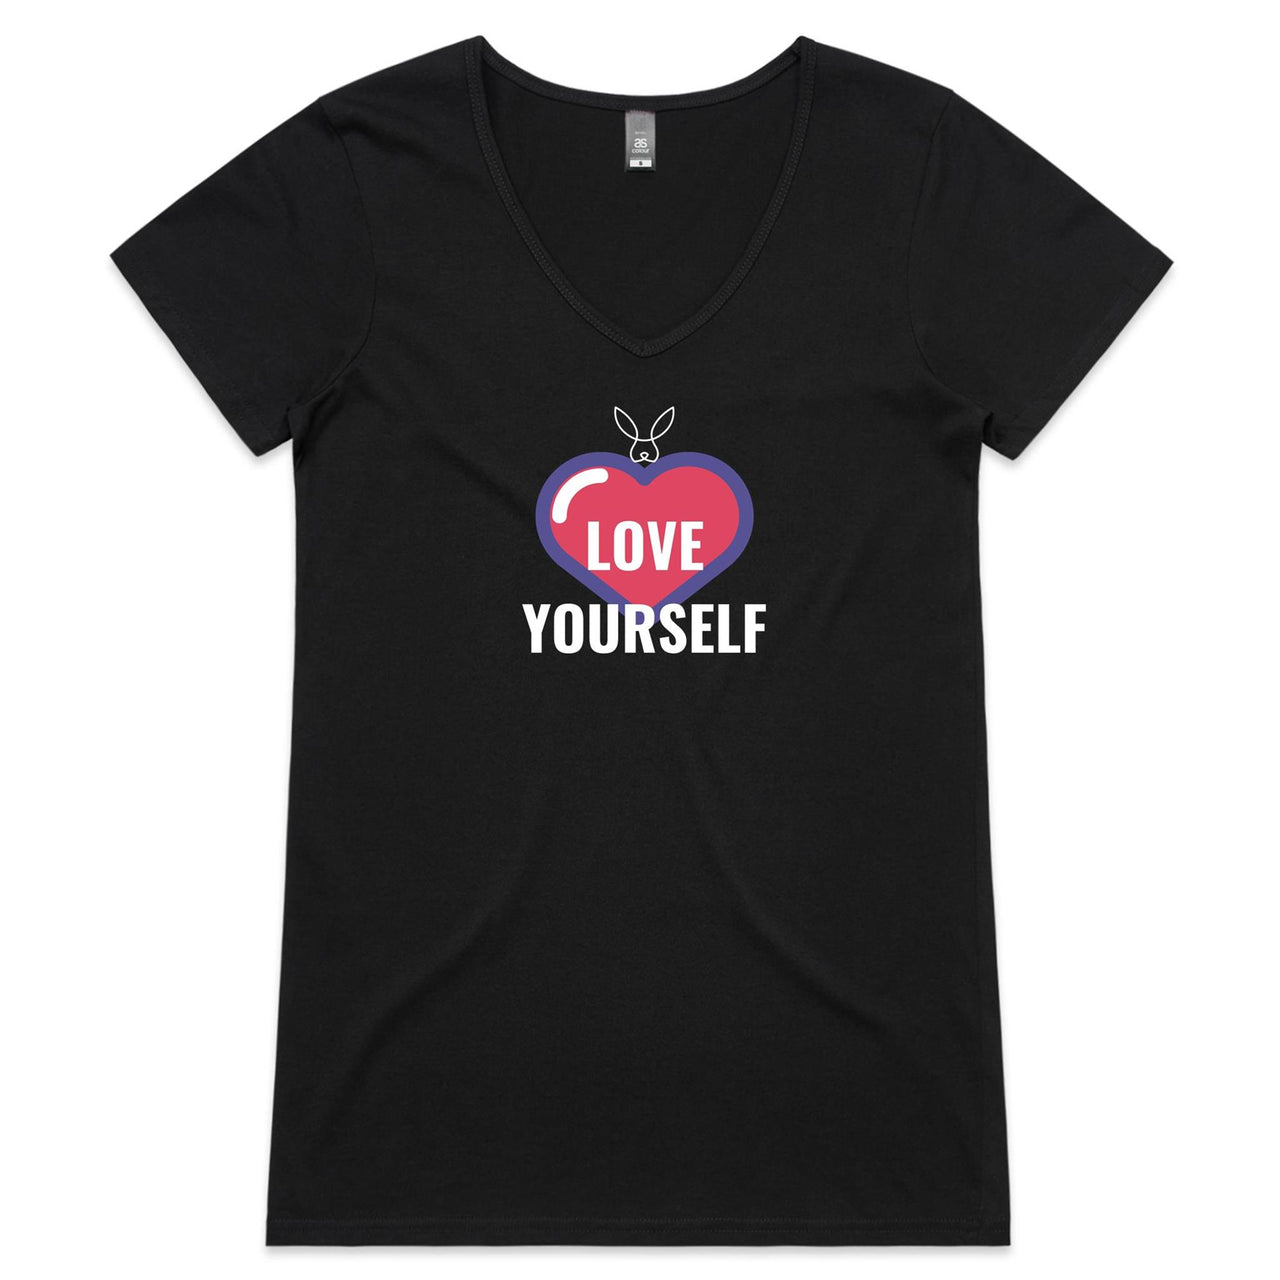 Love Yourself V Neck Tee by CBF Clothing. Mens womens unisex Black